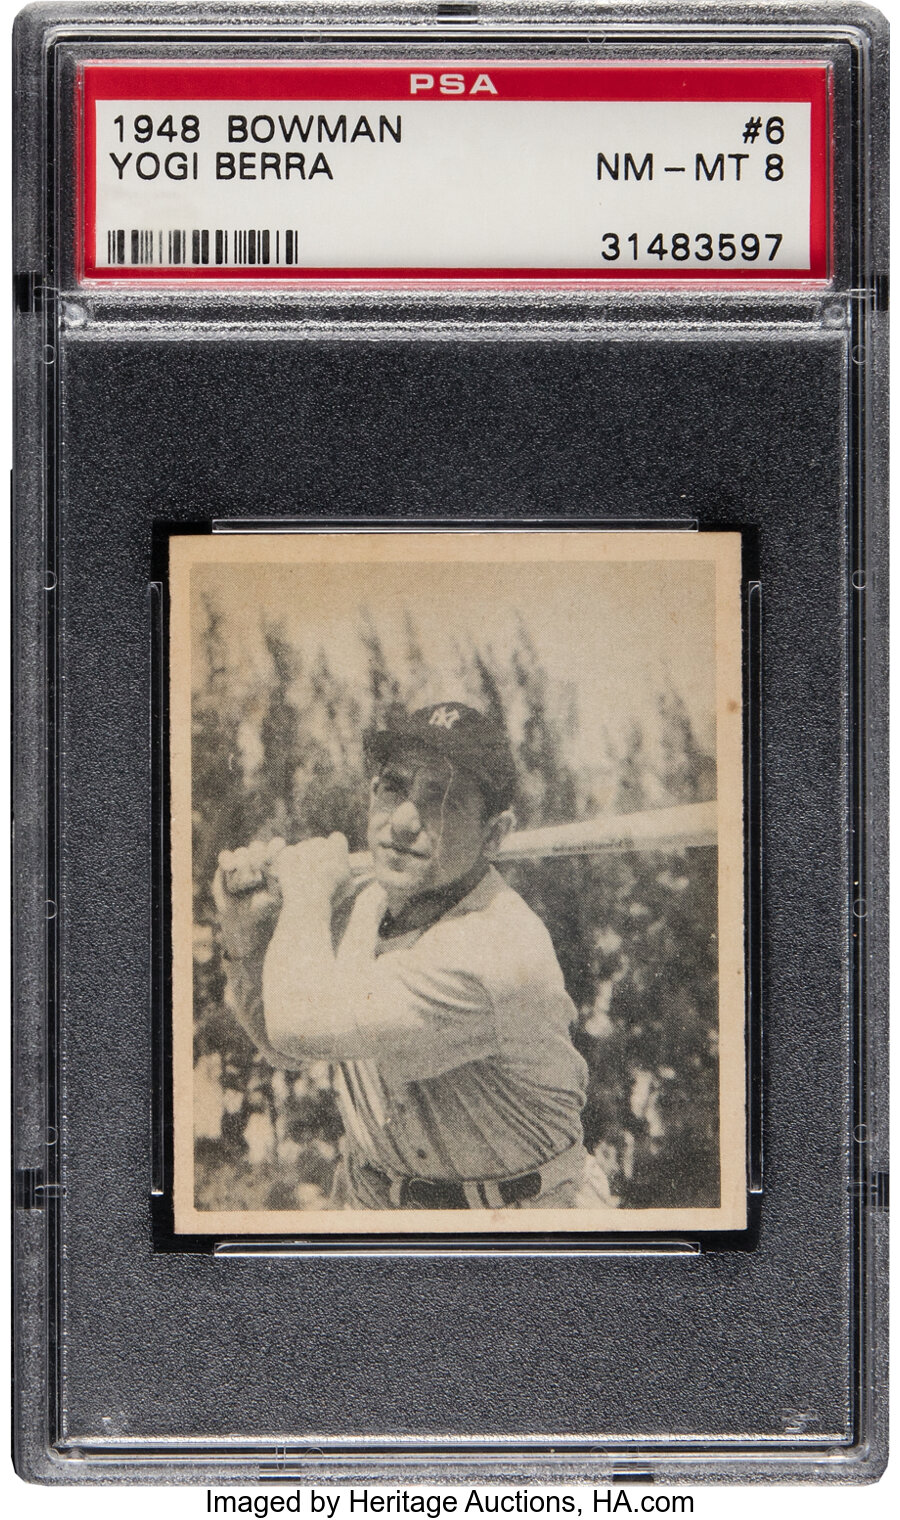 1948 Bowman Yogi Berra Rookie #6 PSA NM-MT 8